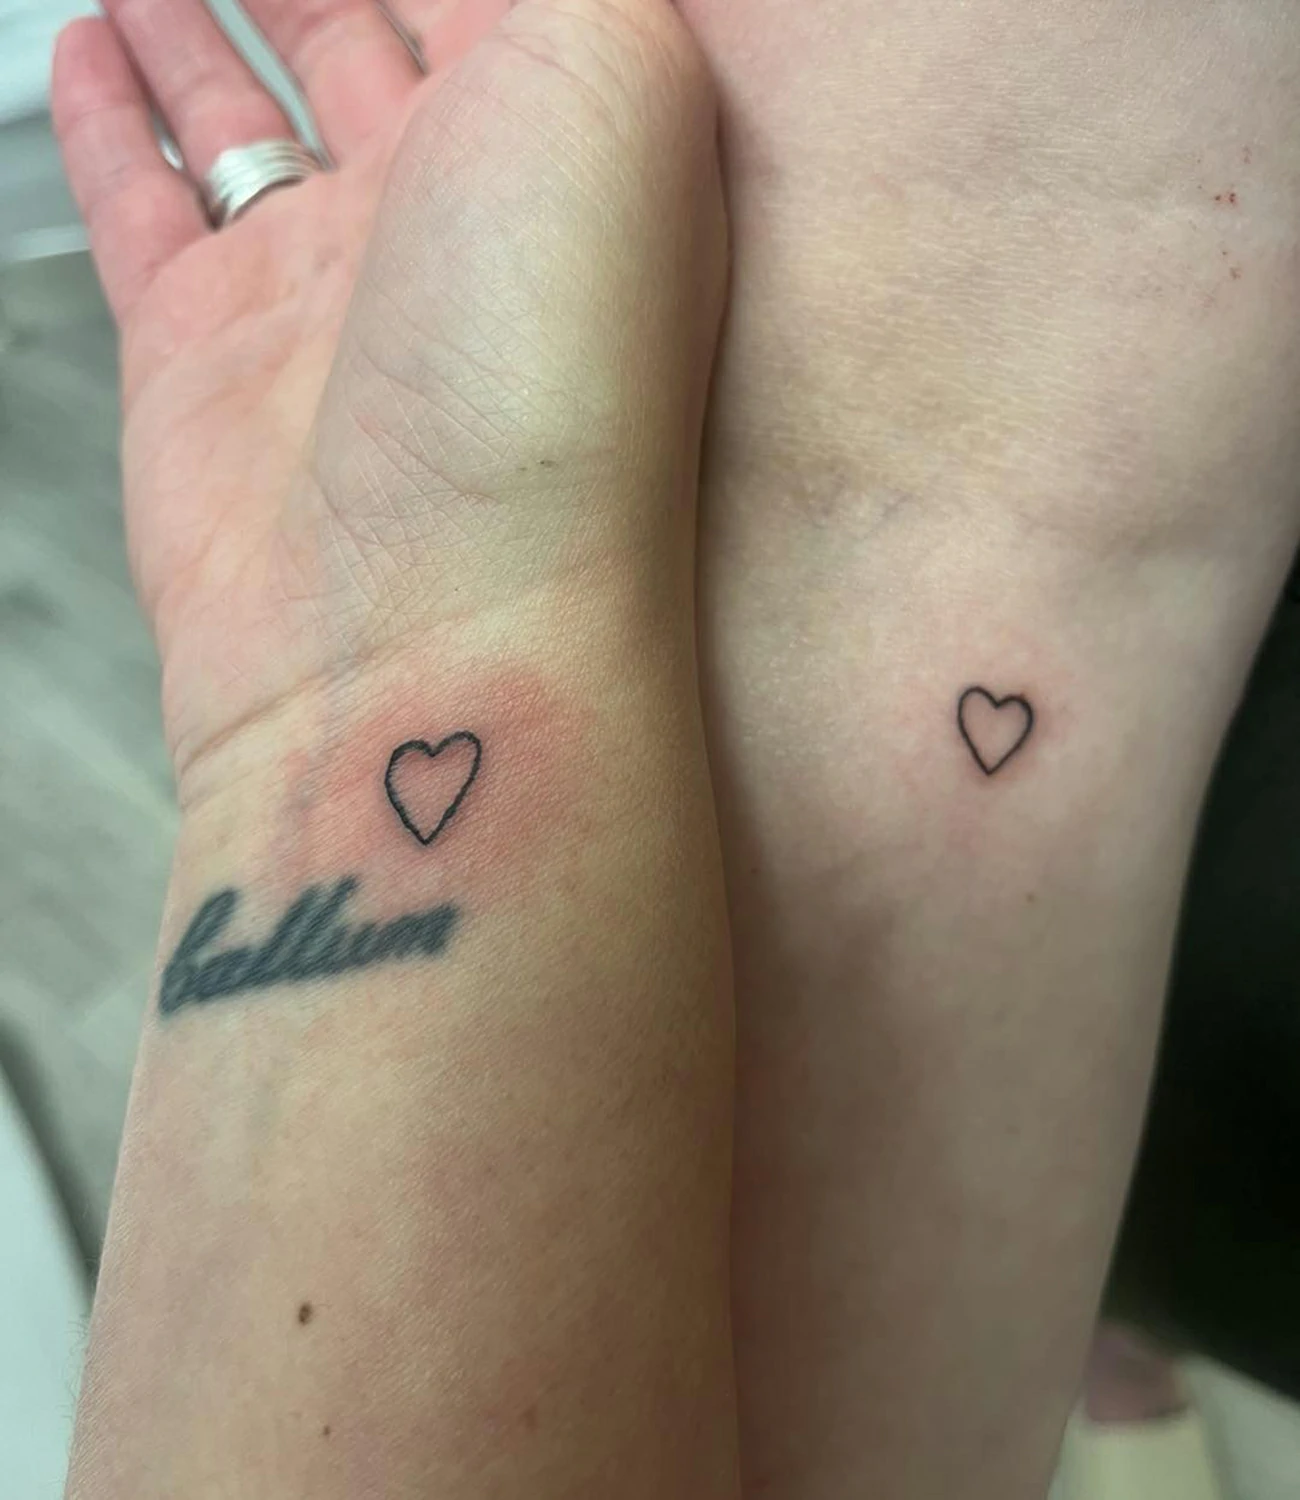 Simple Heart Tattoo